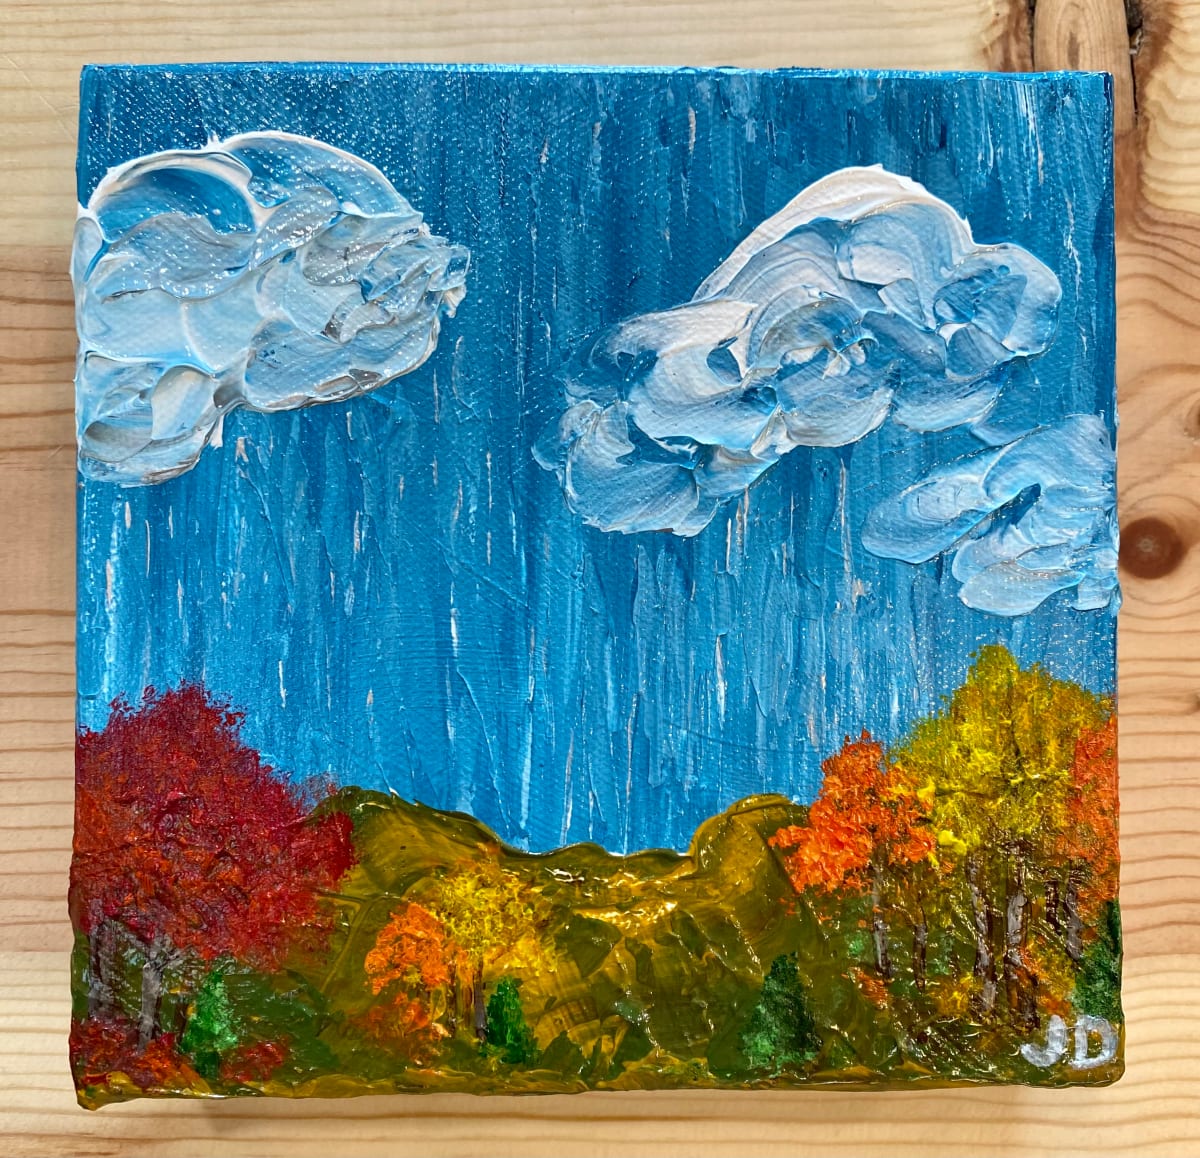 Smoky Mountain Rain by Jenny E. Dennis 